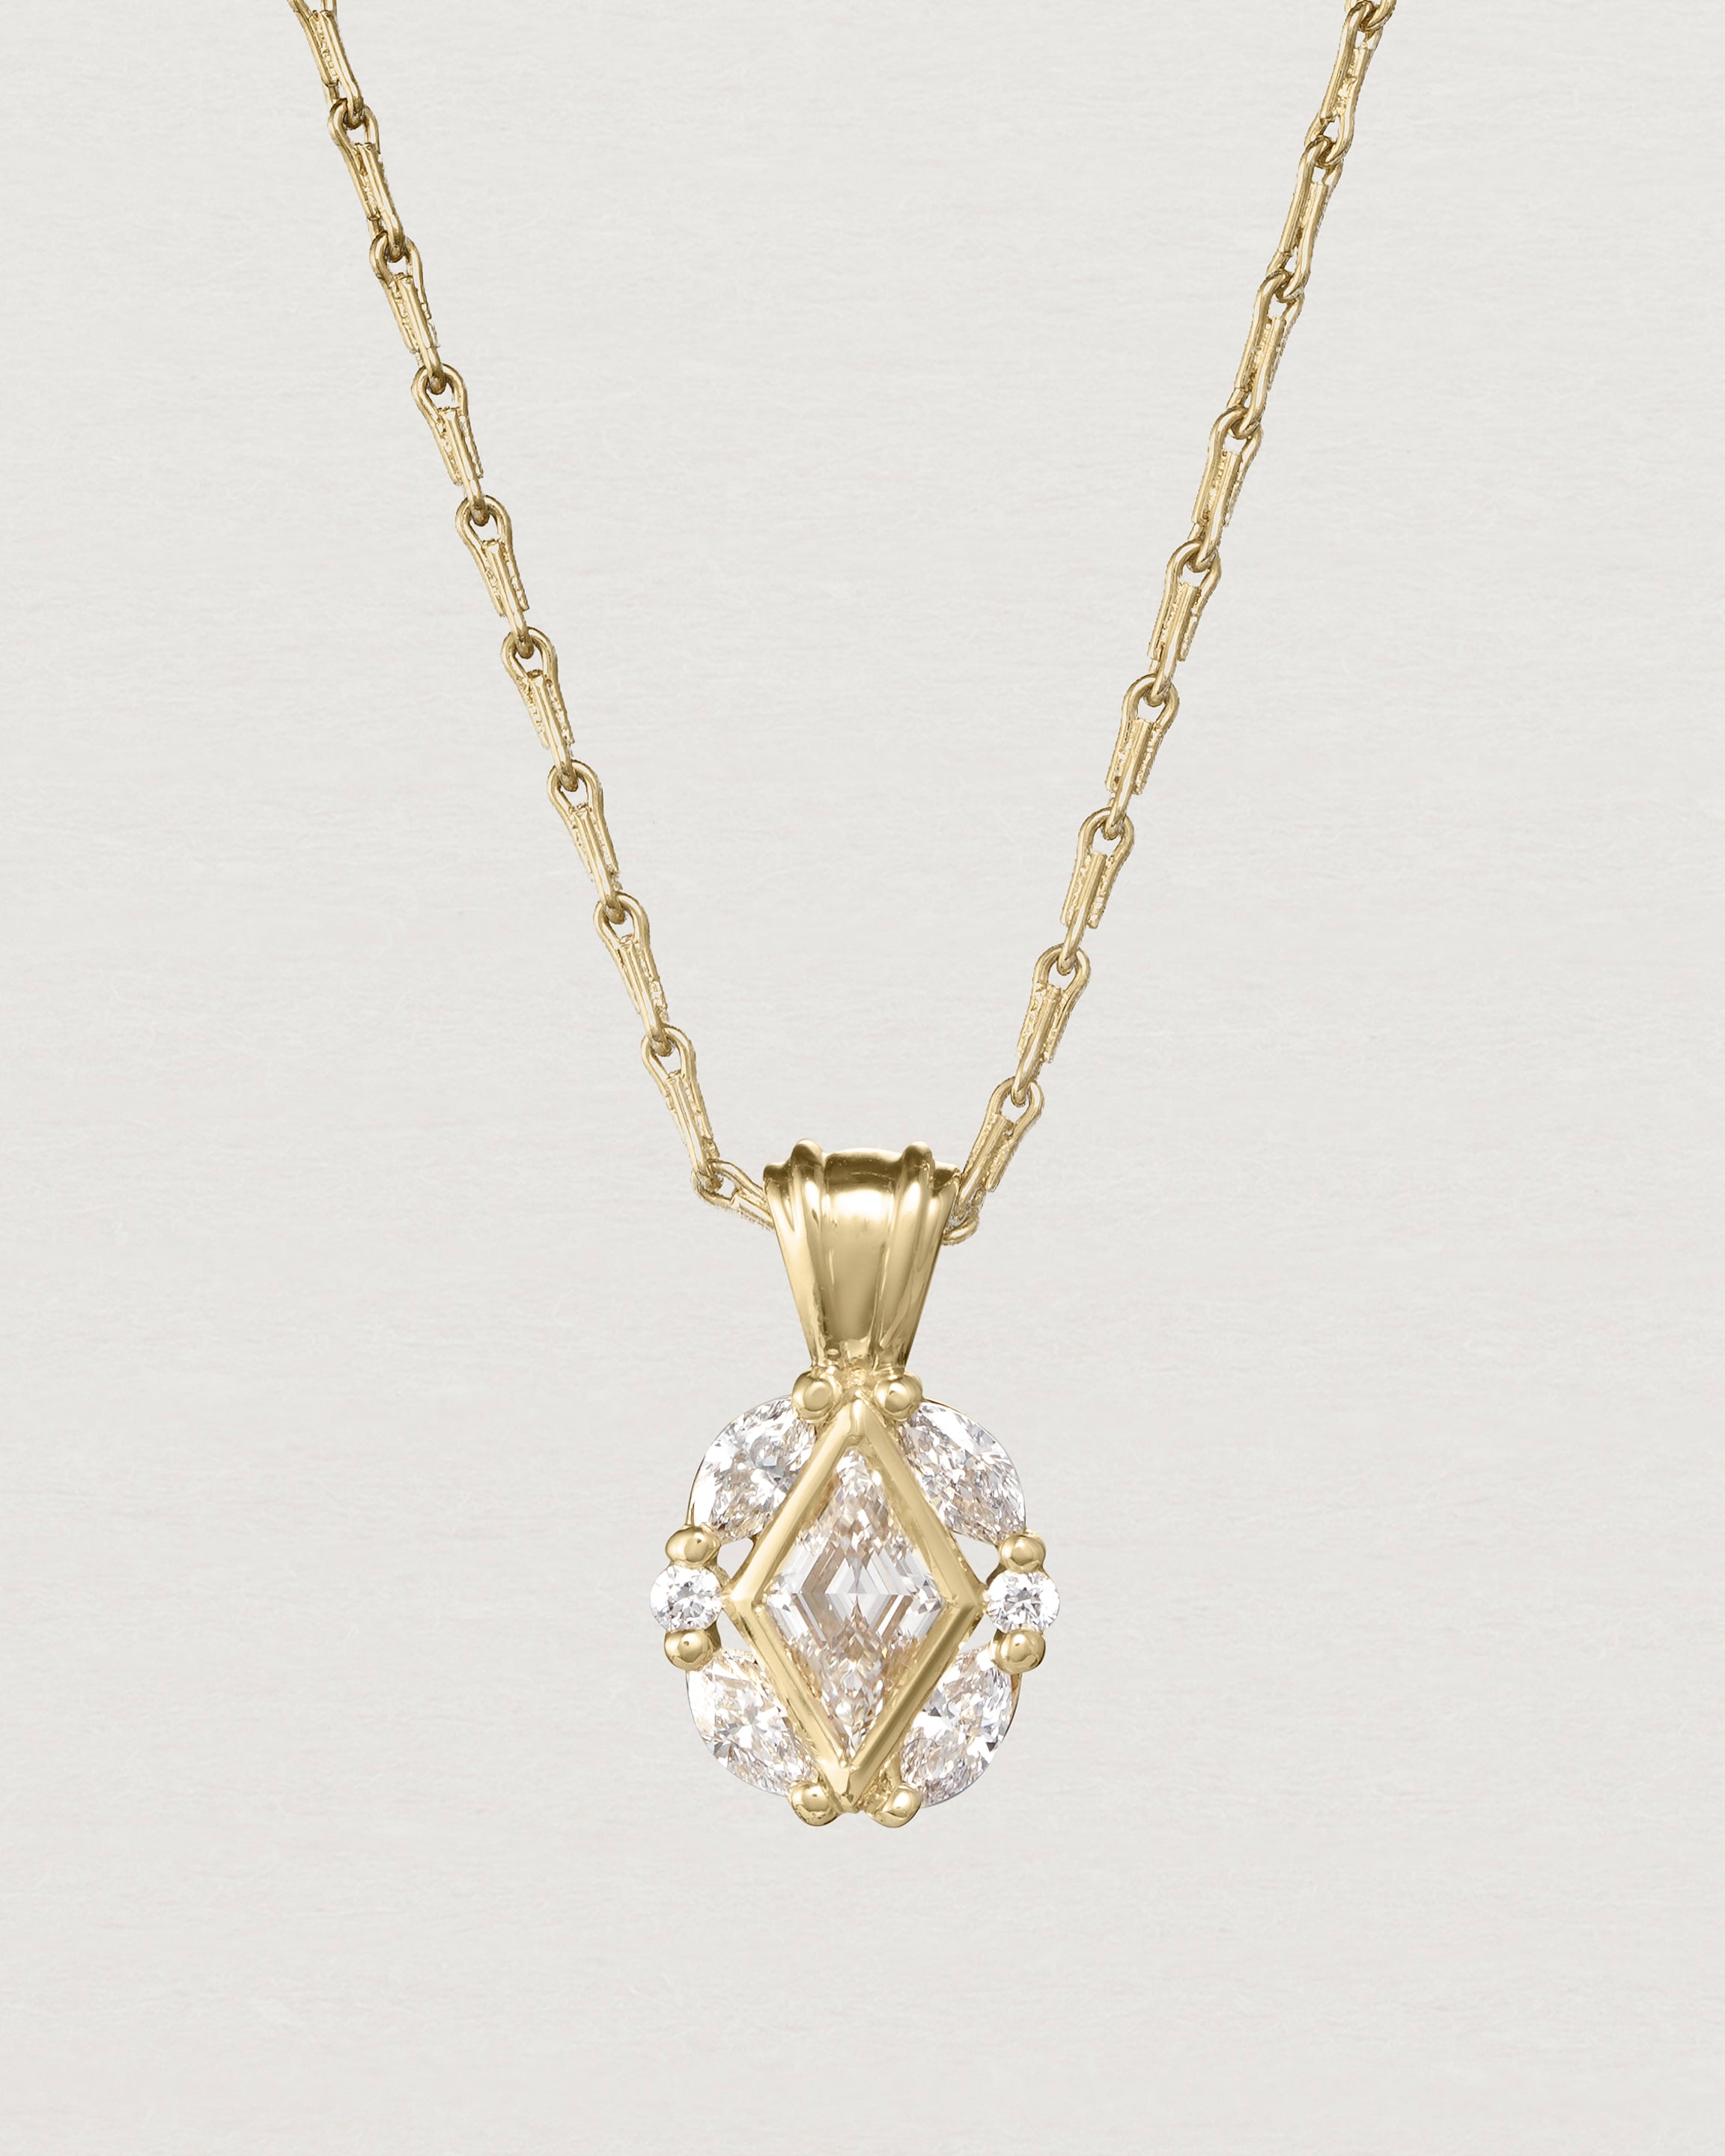 Mavis Necklace | Vintage Inspired